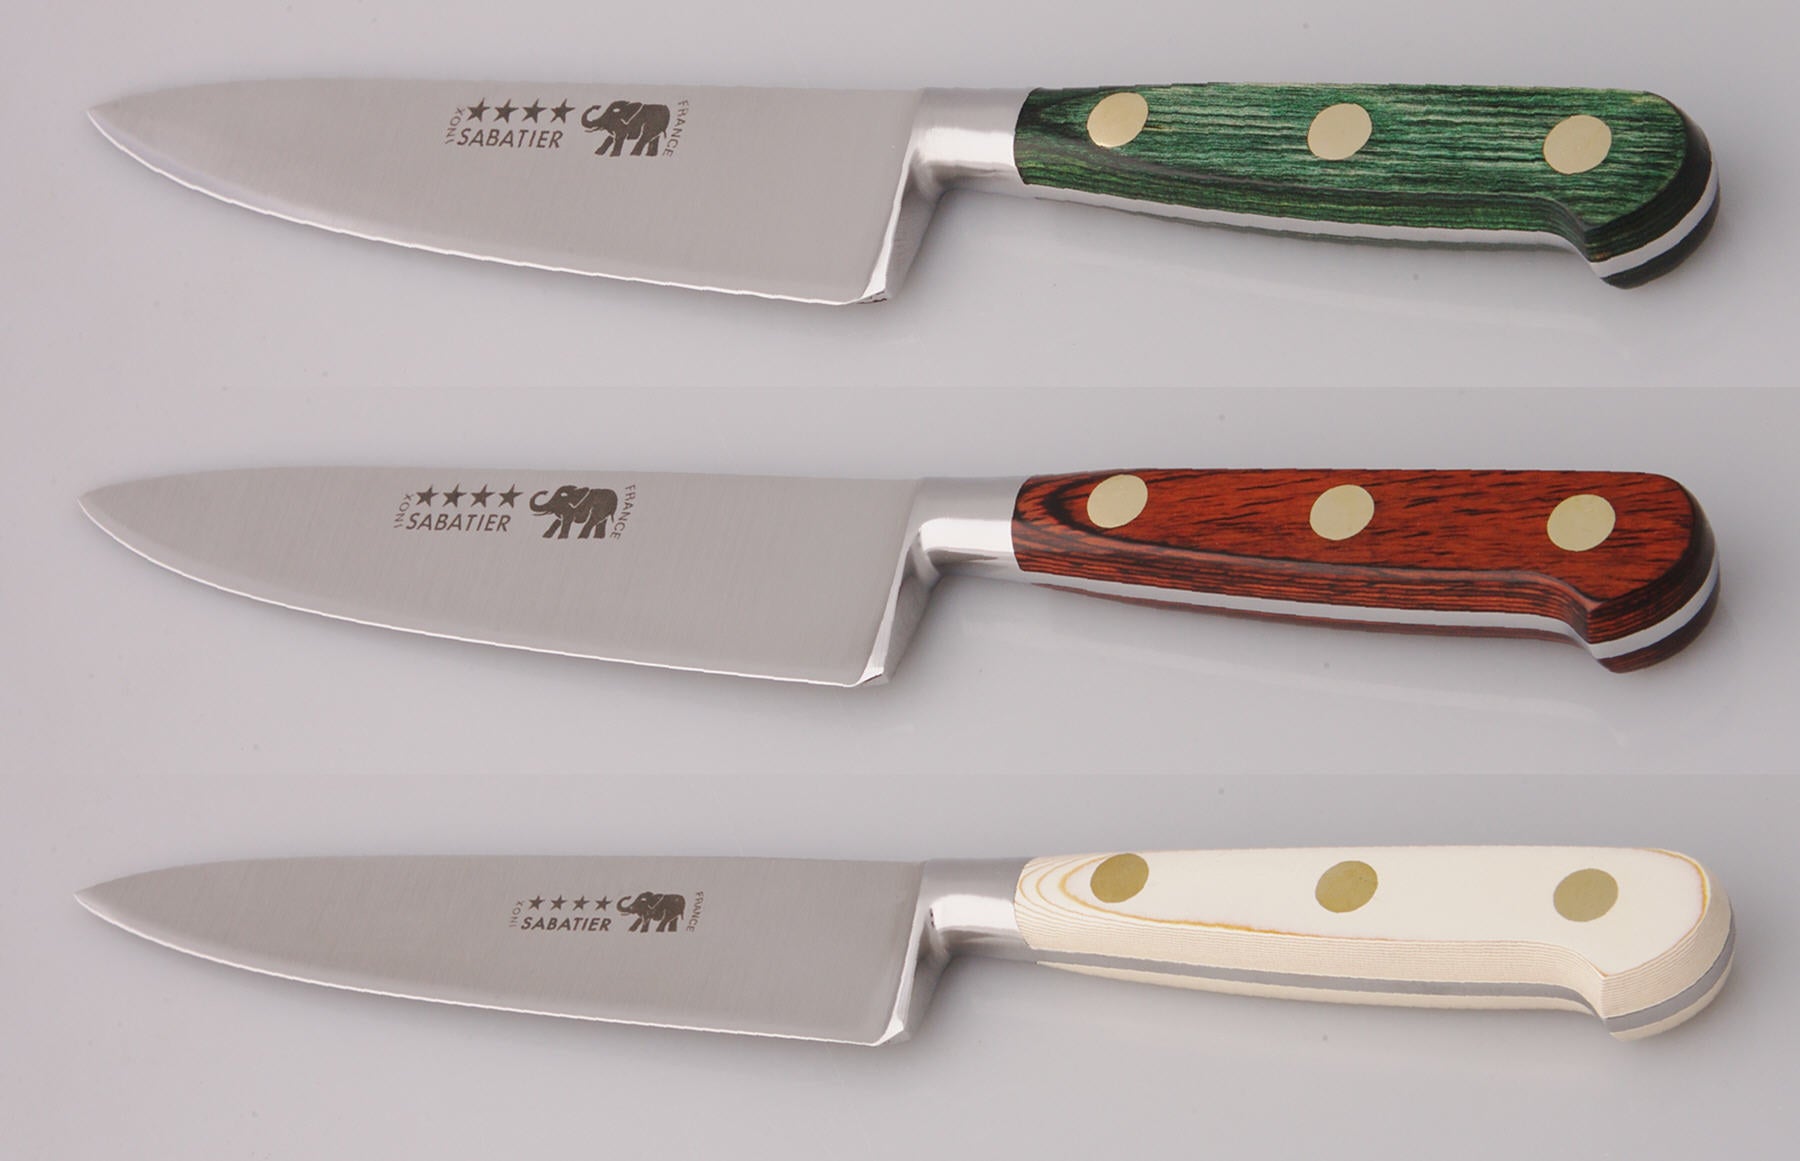 6 Inch Chefs Knife